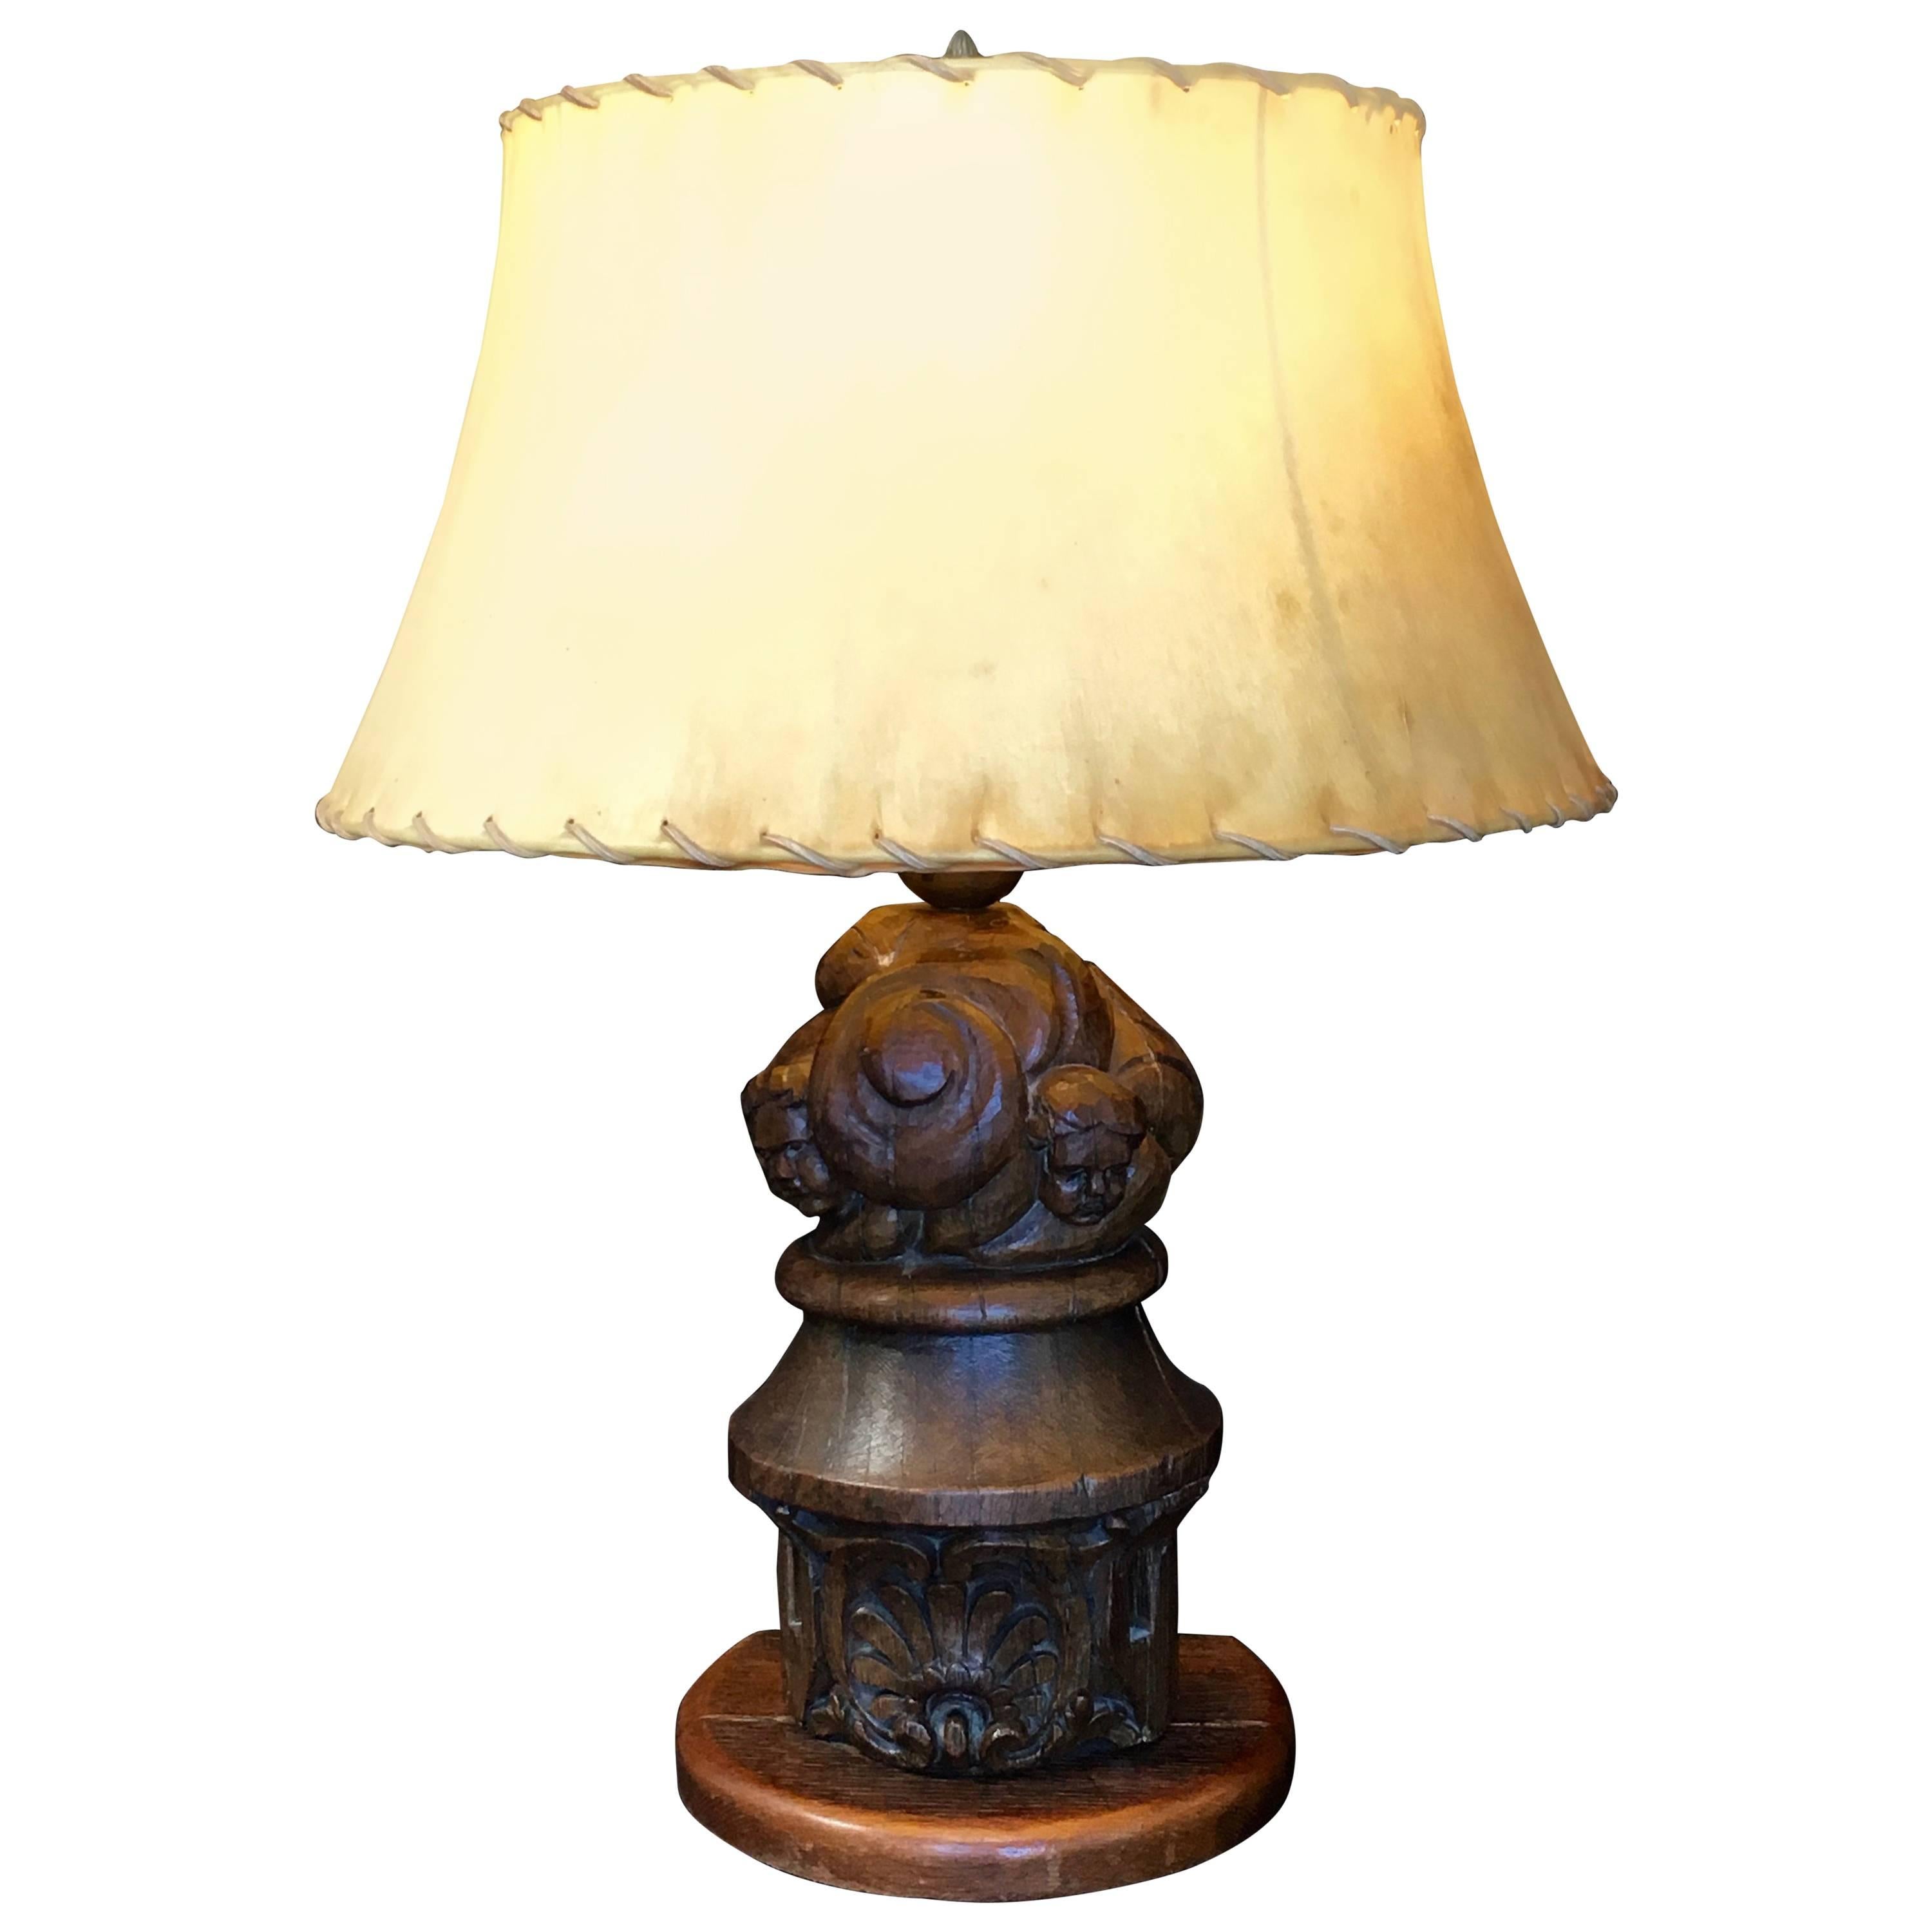 18th Century Architectural Element Lamp Conversion For Sale